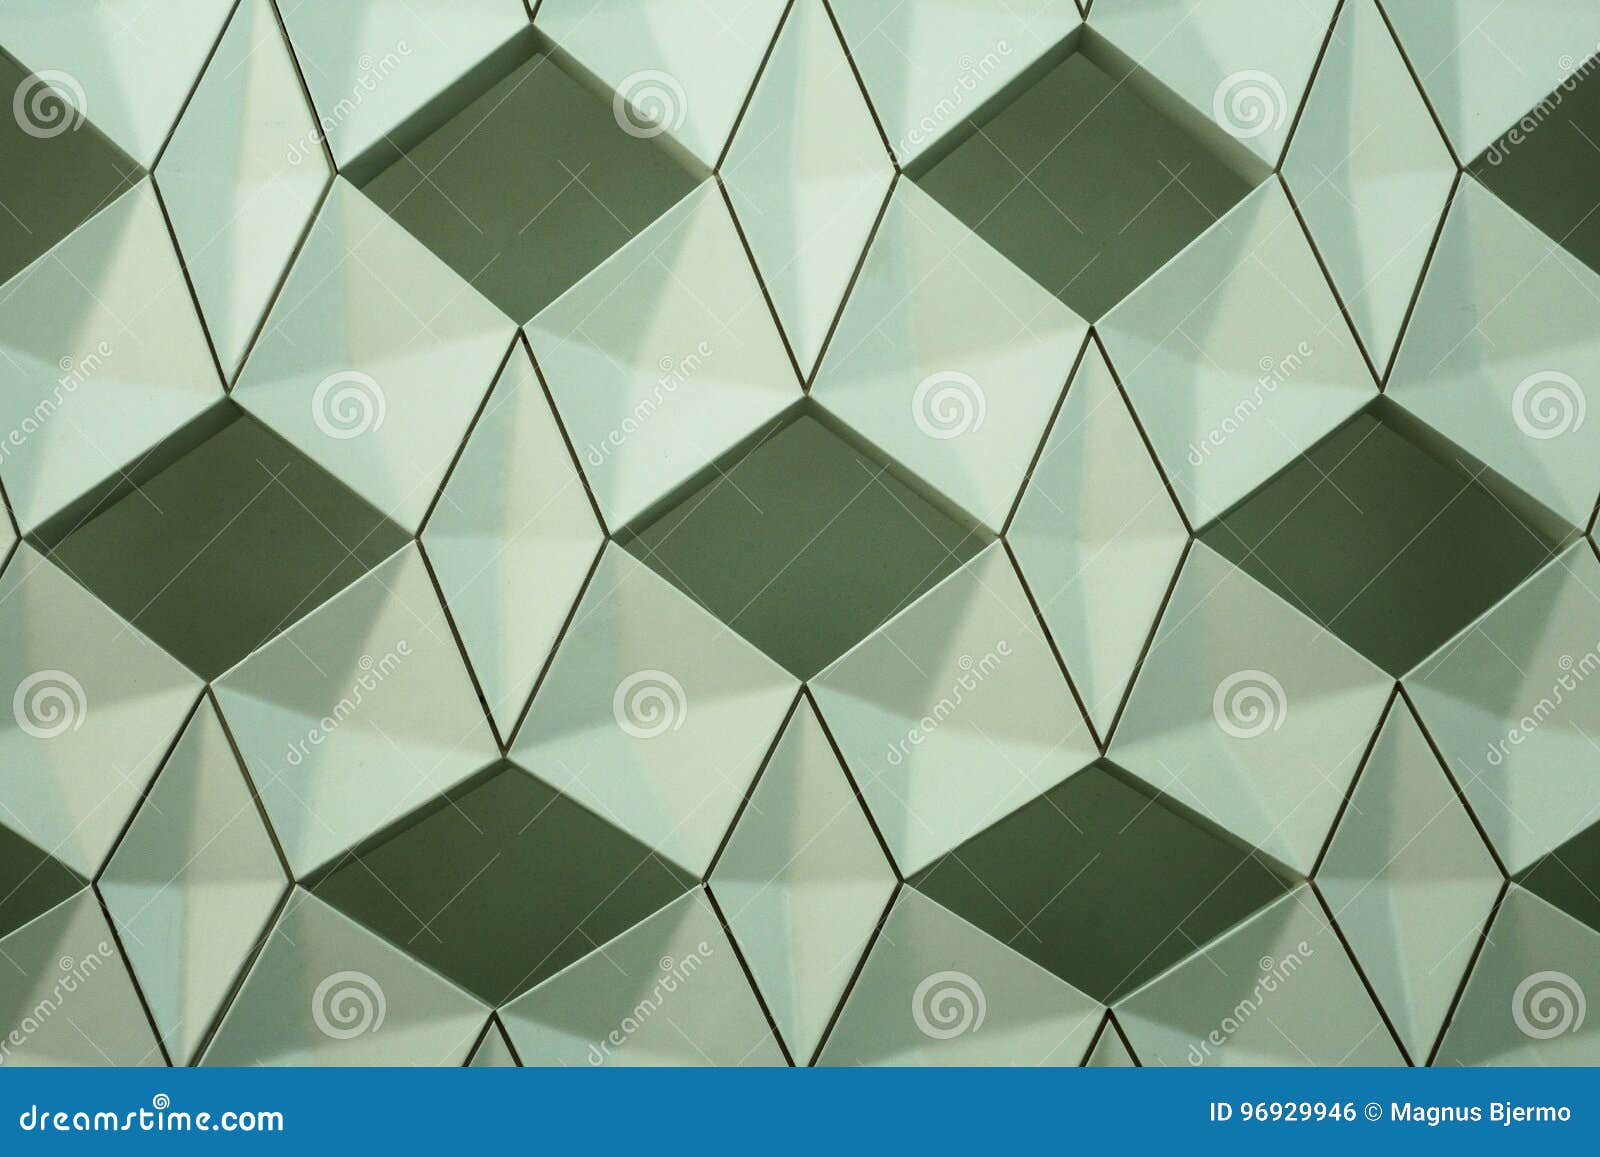 Detail Of Modern Geometric Wall Design Stock Photo Image